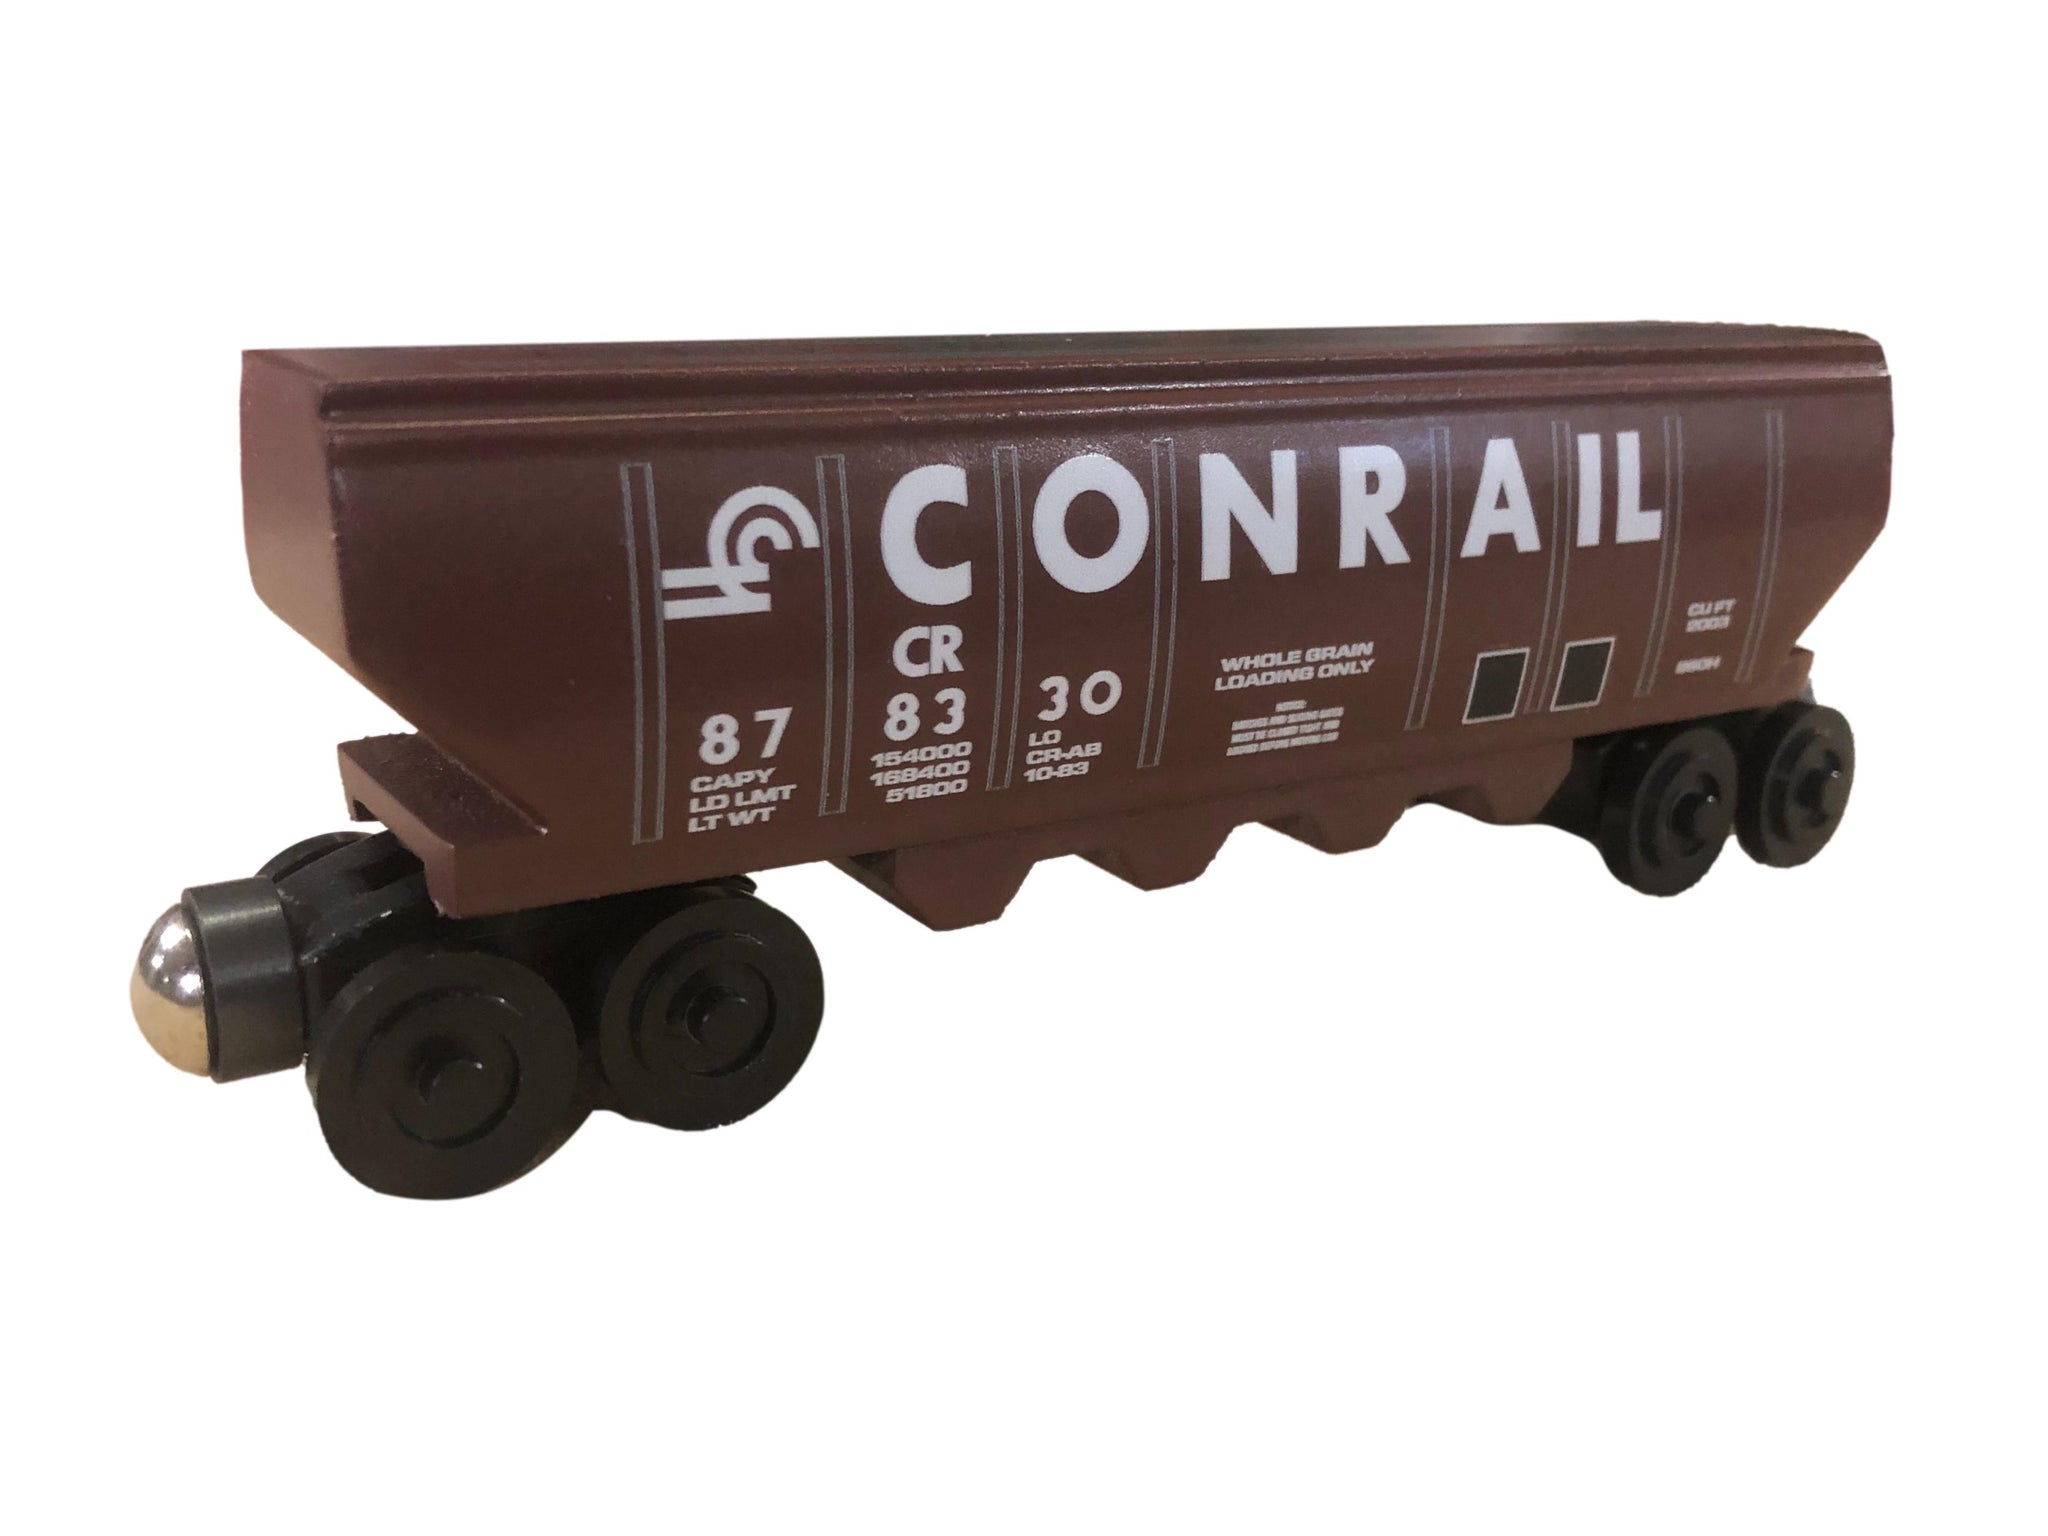 Conrail Trinity Covered Hopper - Brown